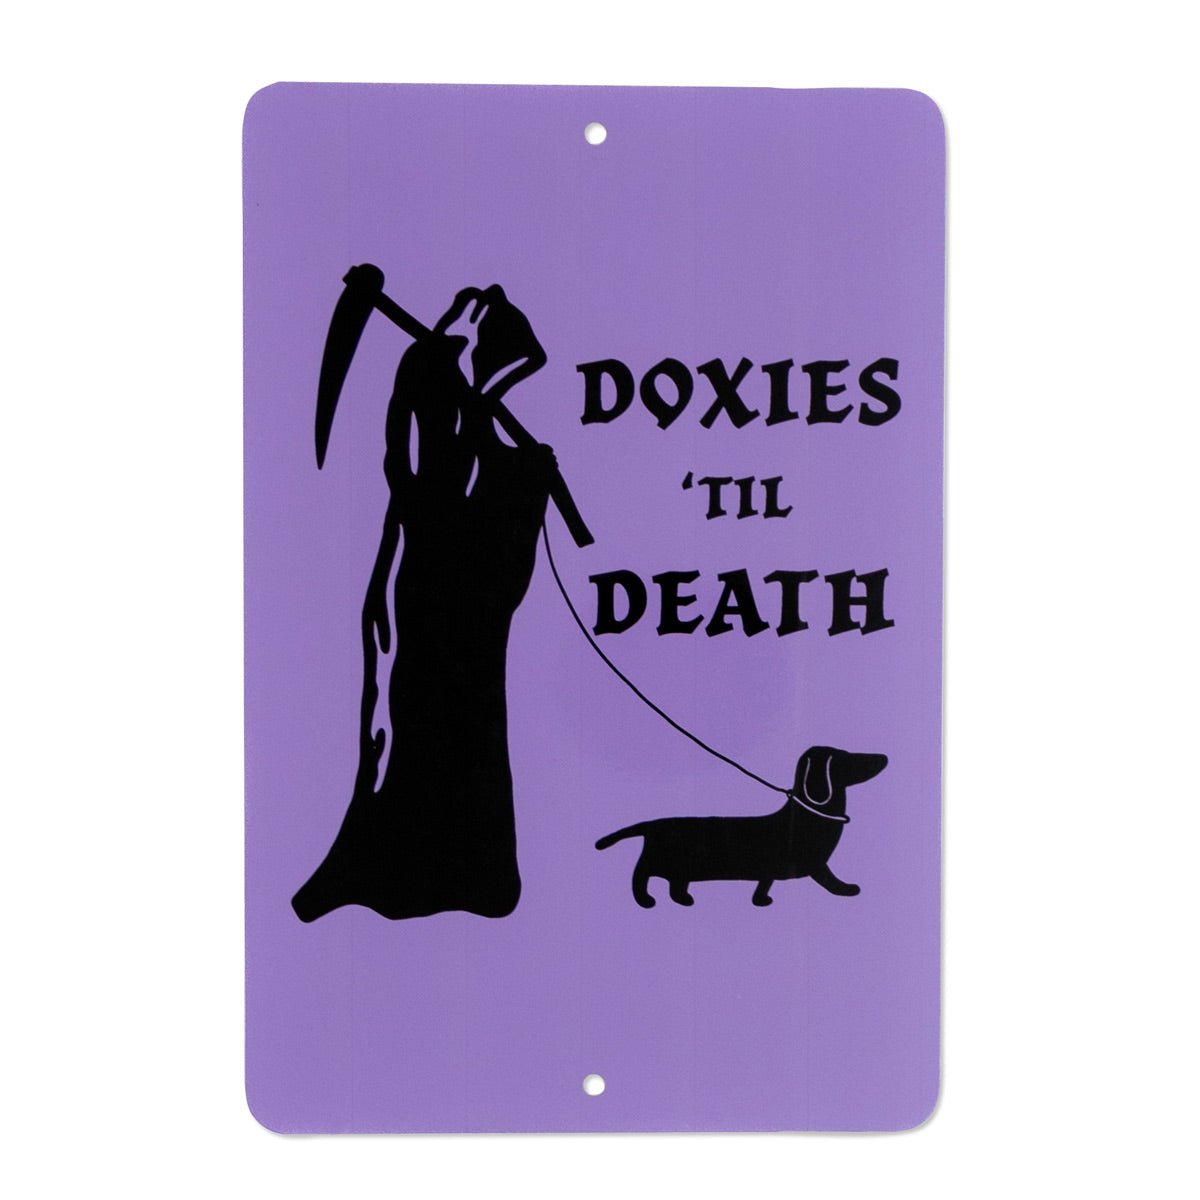 doxies 'til death metal sign - bean goods